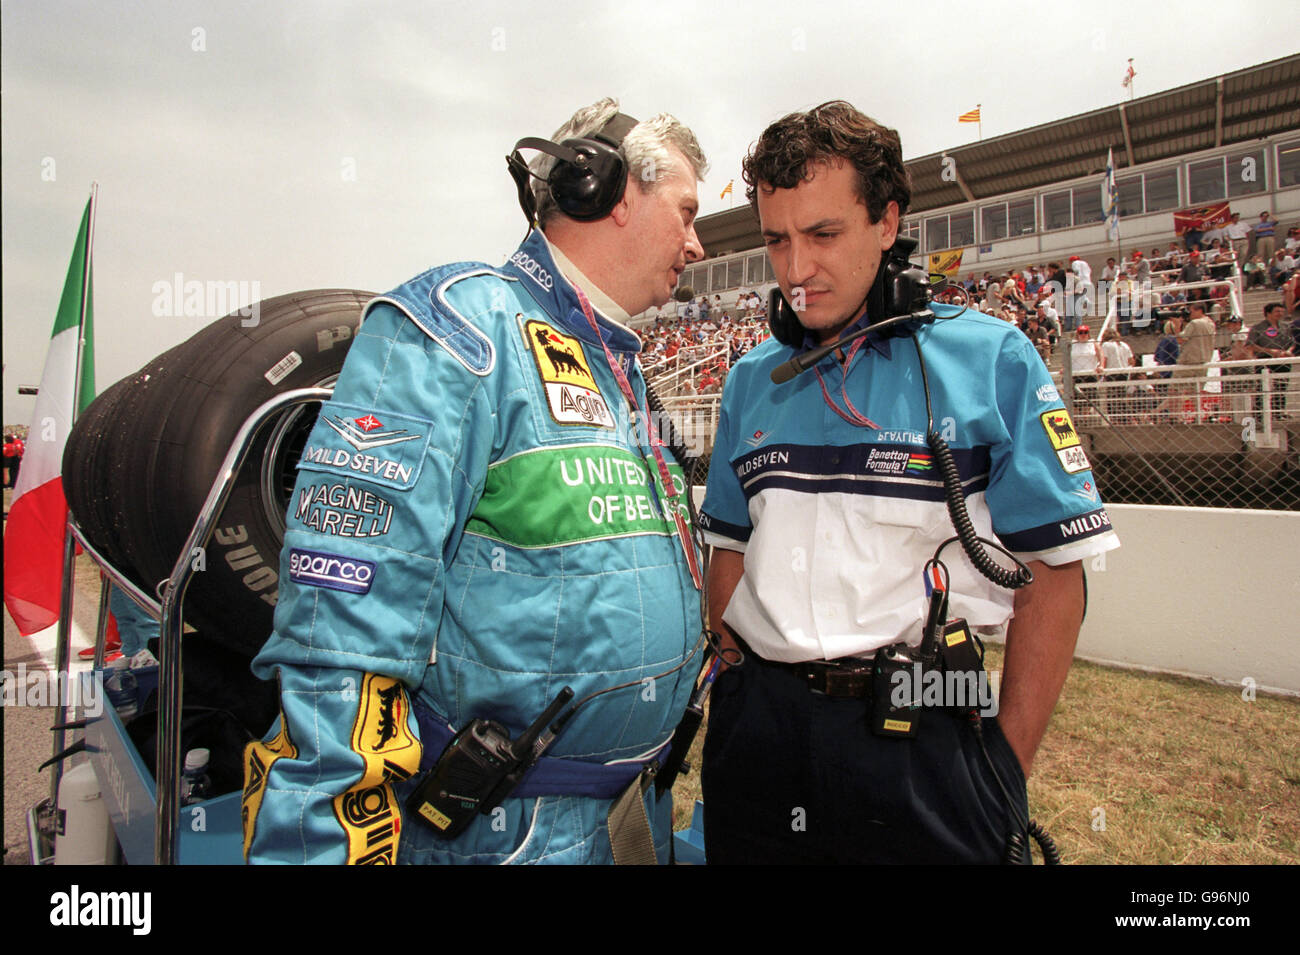 Benetton F1 Team Fotos e Imágenes de stock - Alamy